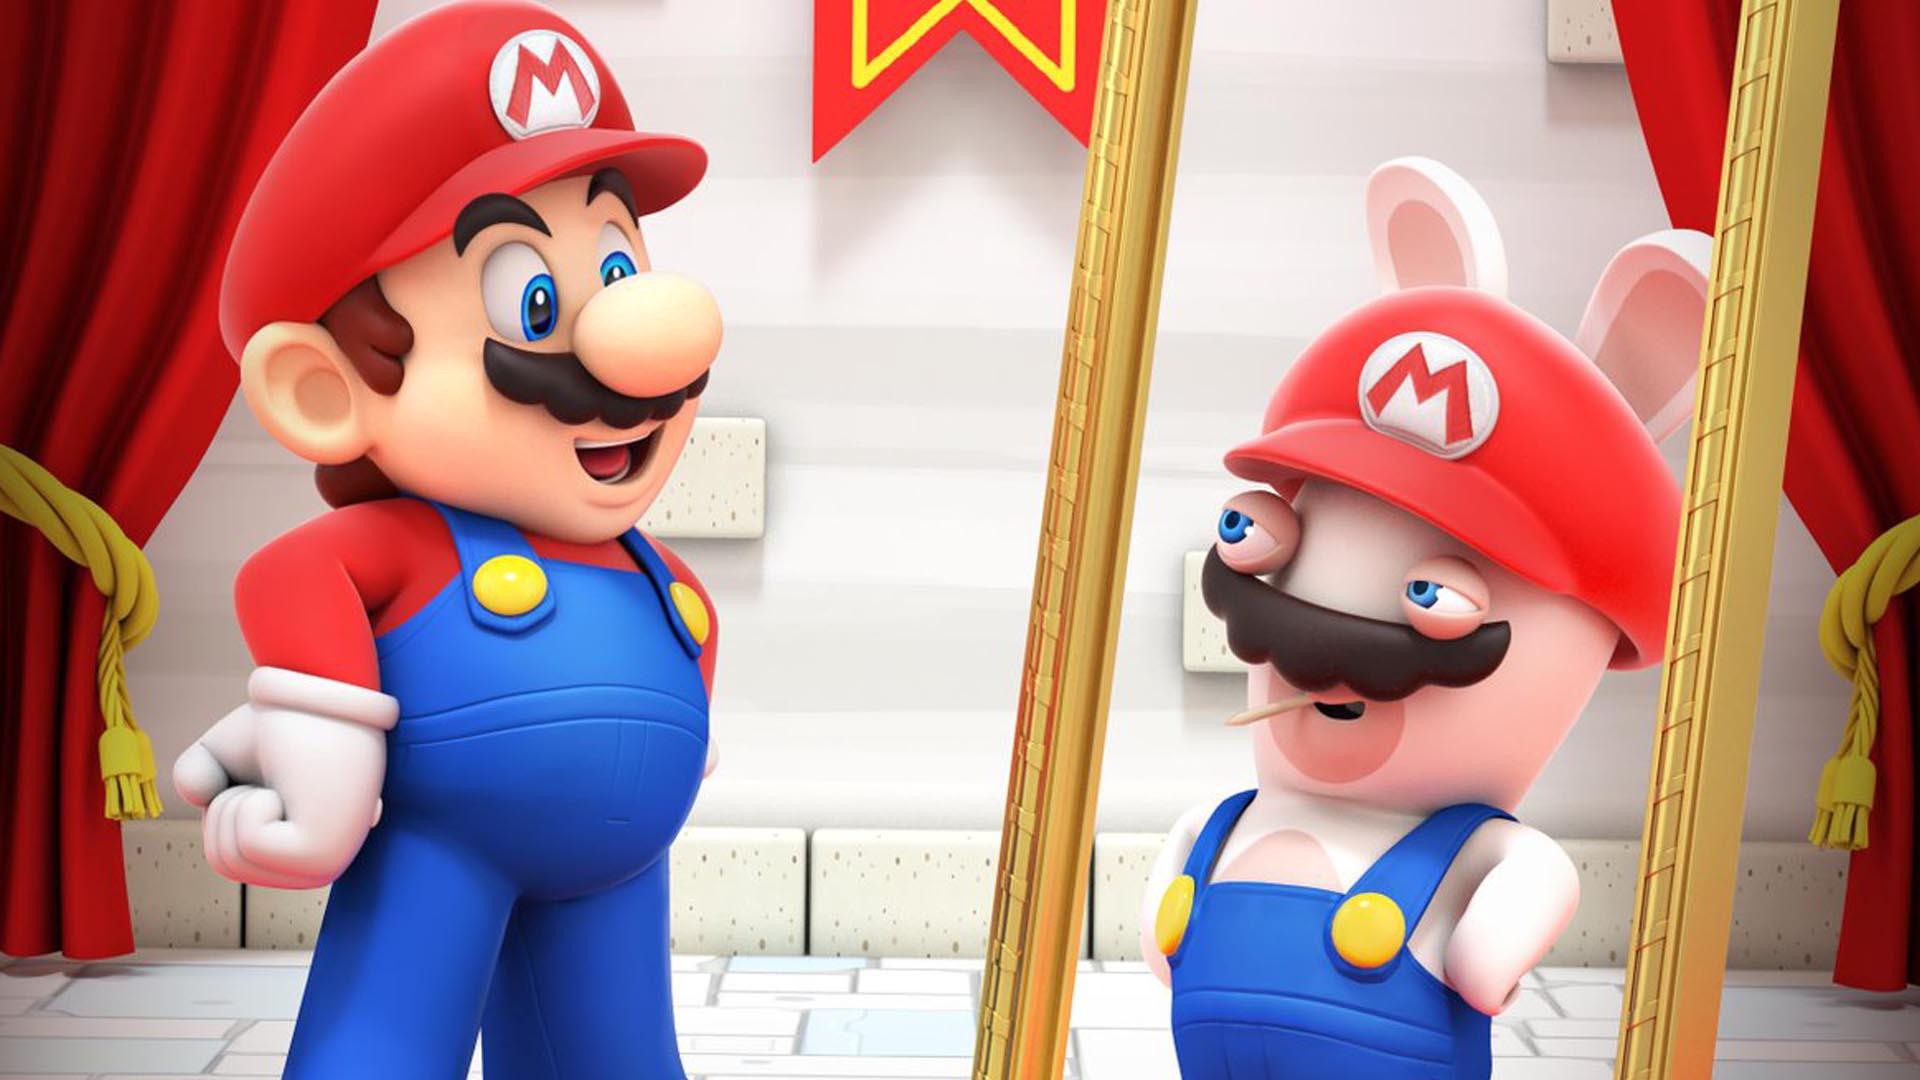 Mario + Rabbids Kingdom Battle Tips and Tricks